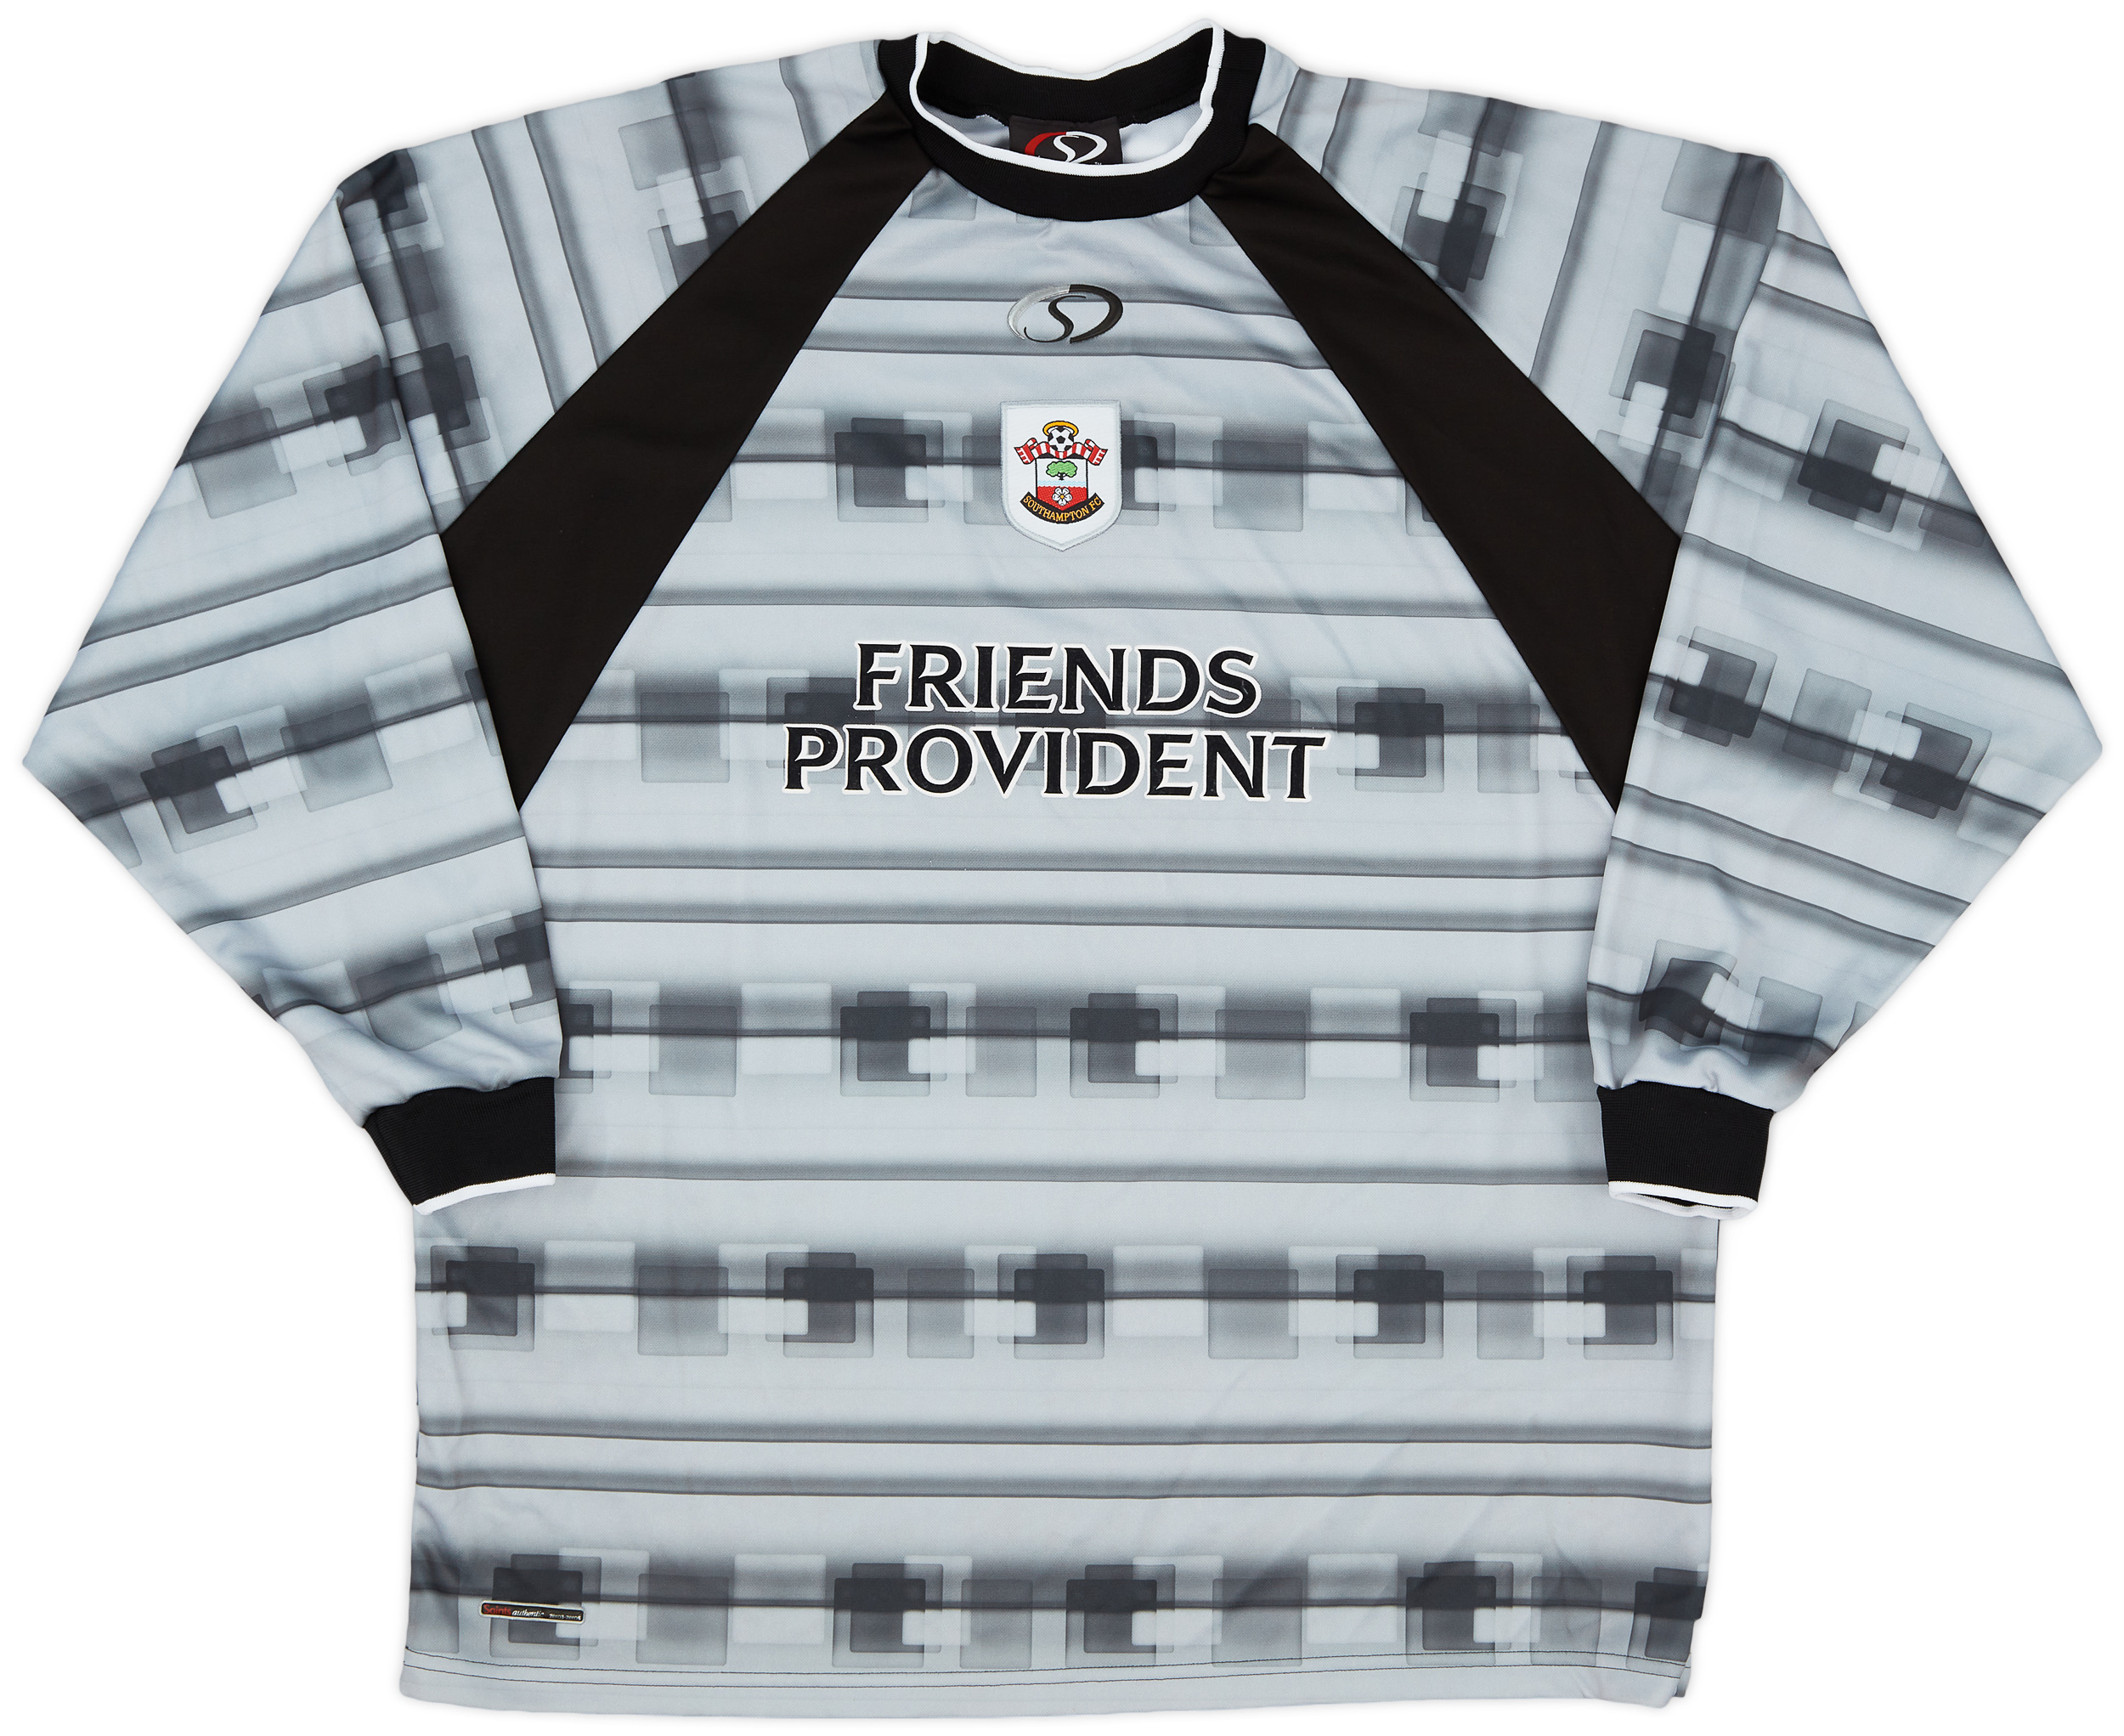 Southampton  Goalkeeper shirt (Original)